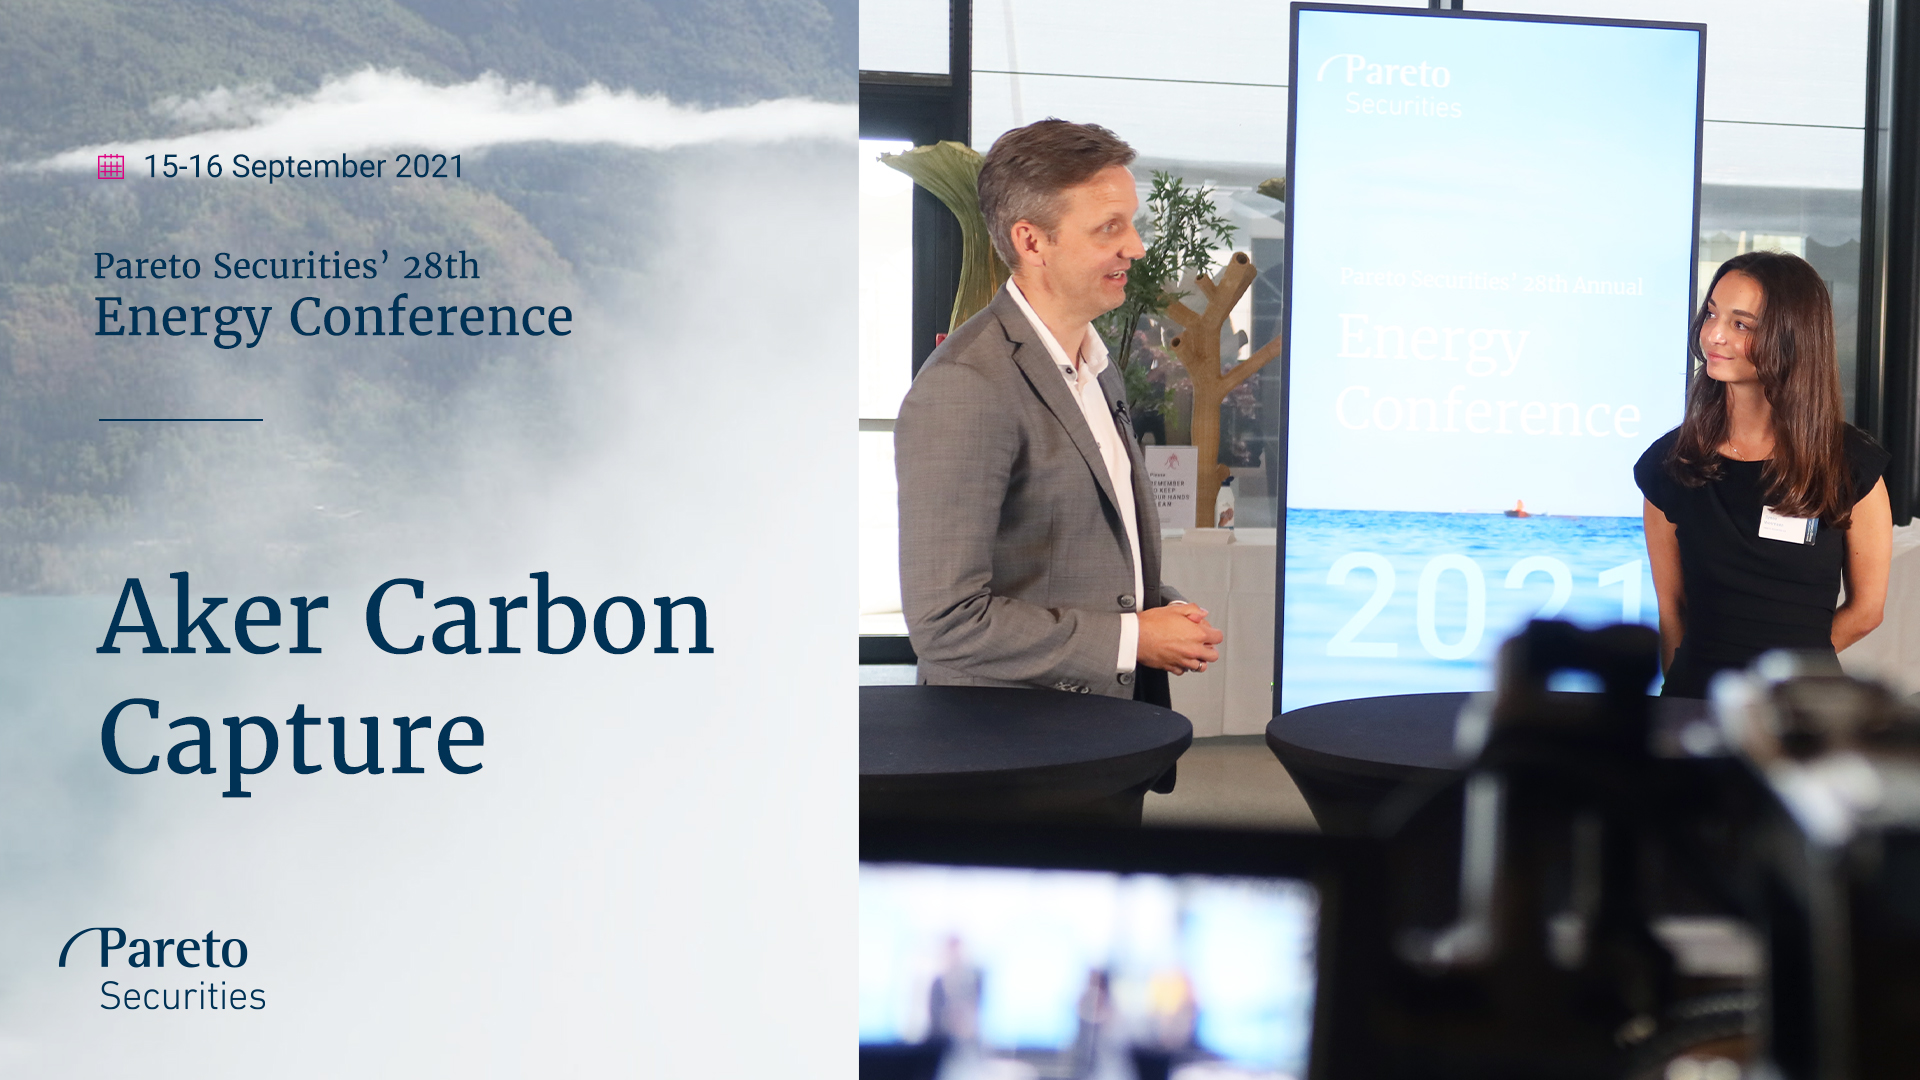 Aker Carbon Capture / Pareto Securities’ 28th Energy Conference